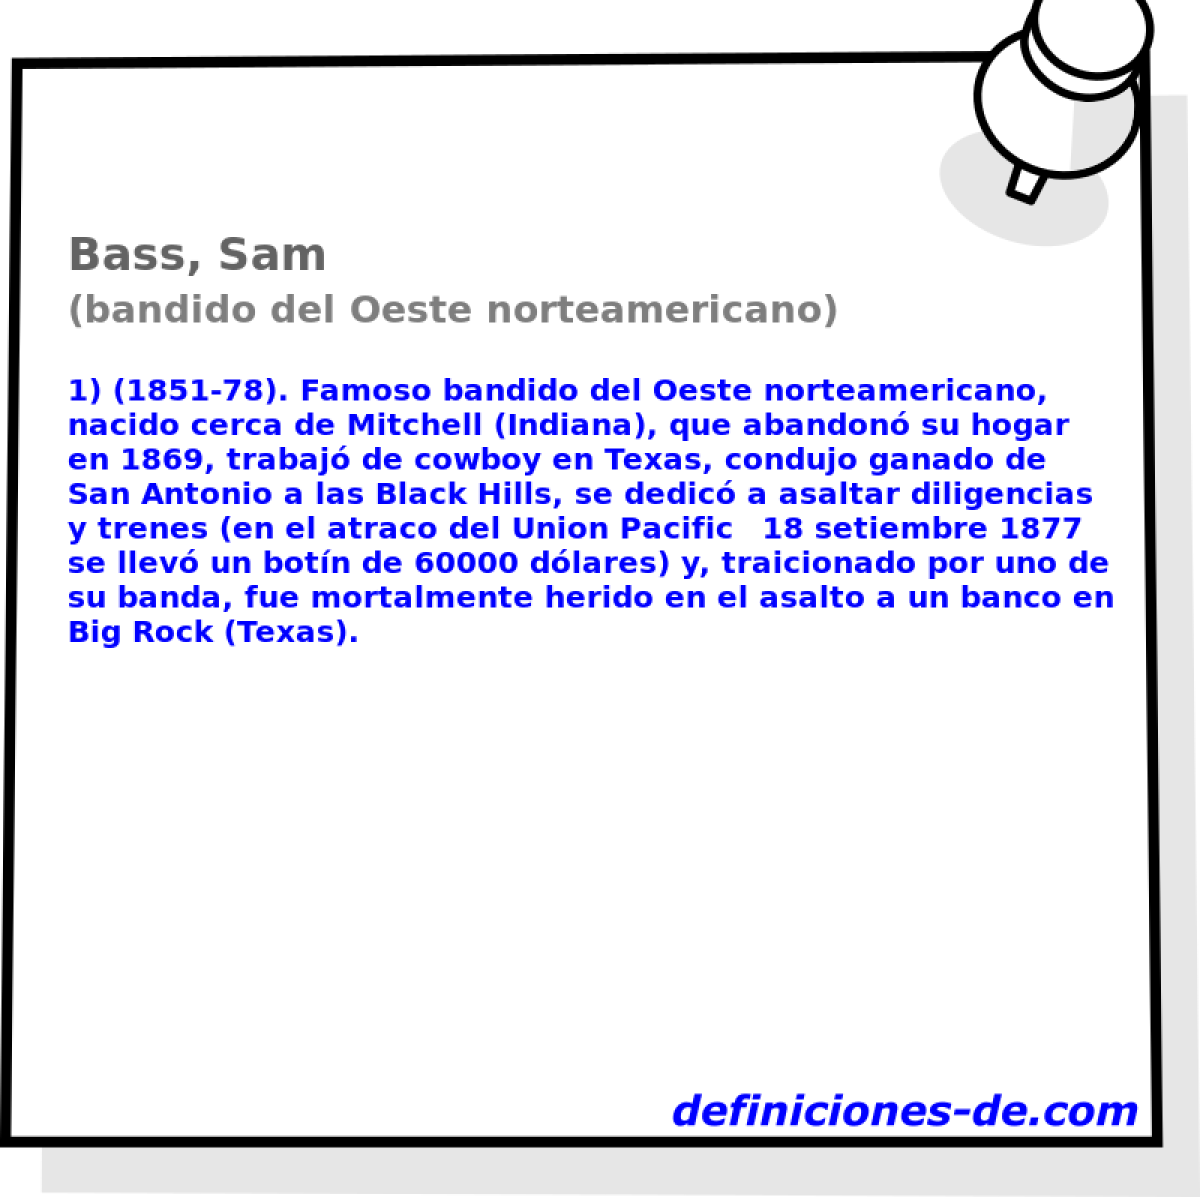 Bass, Sam (bandido del Oeste norteamericano)